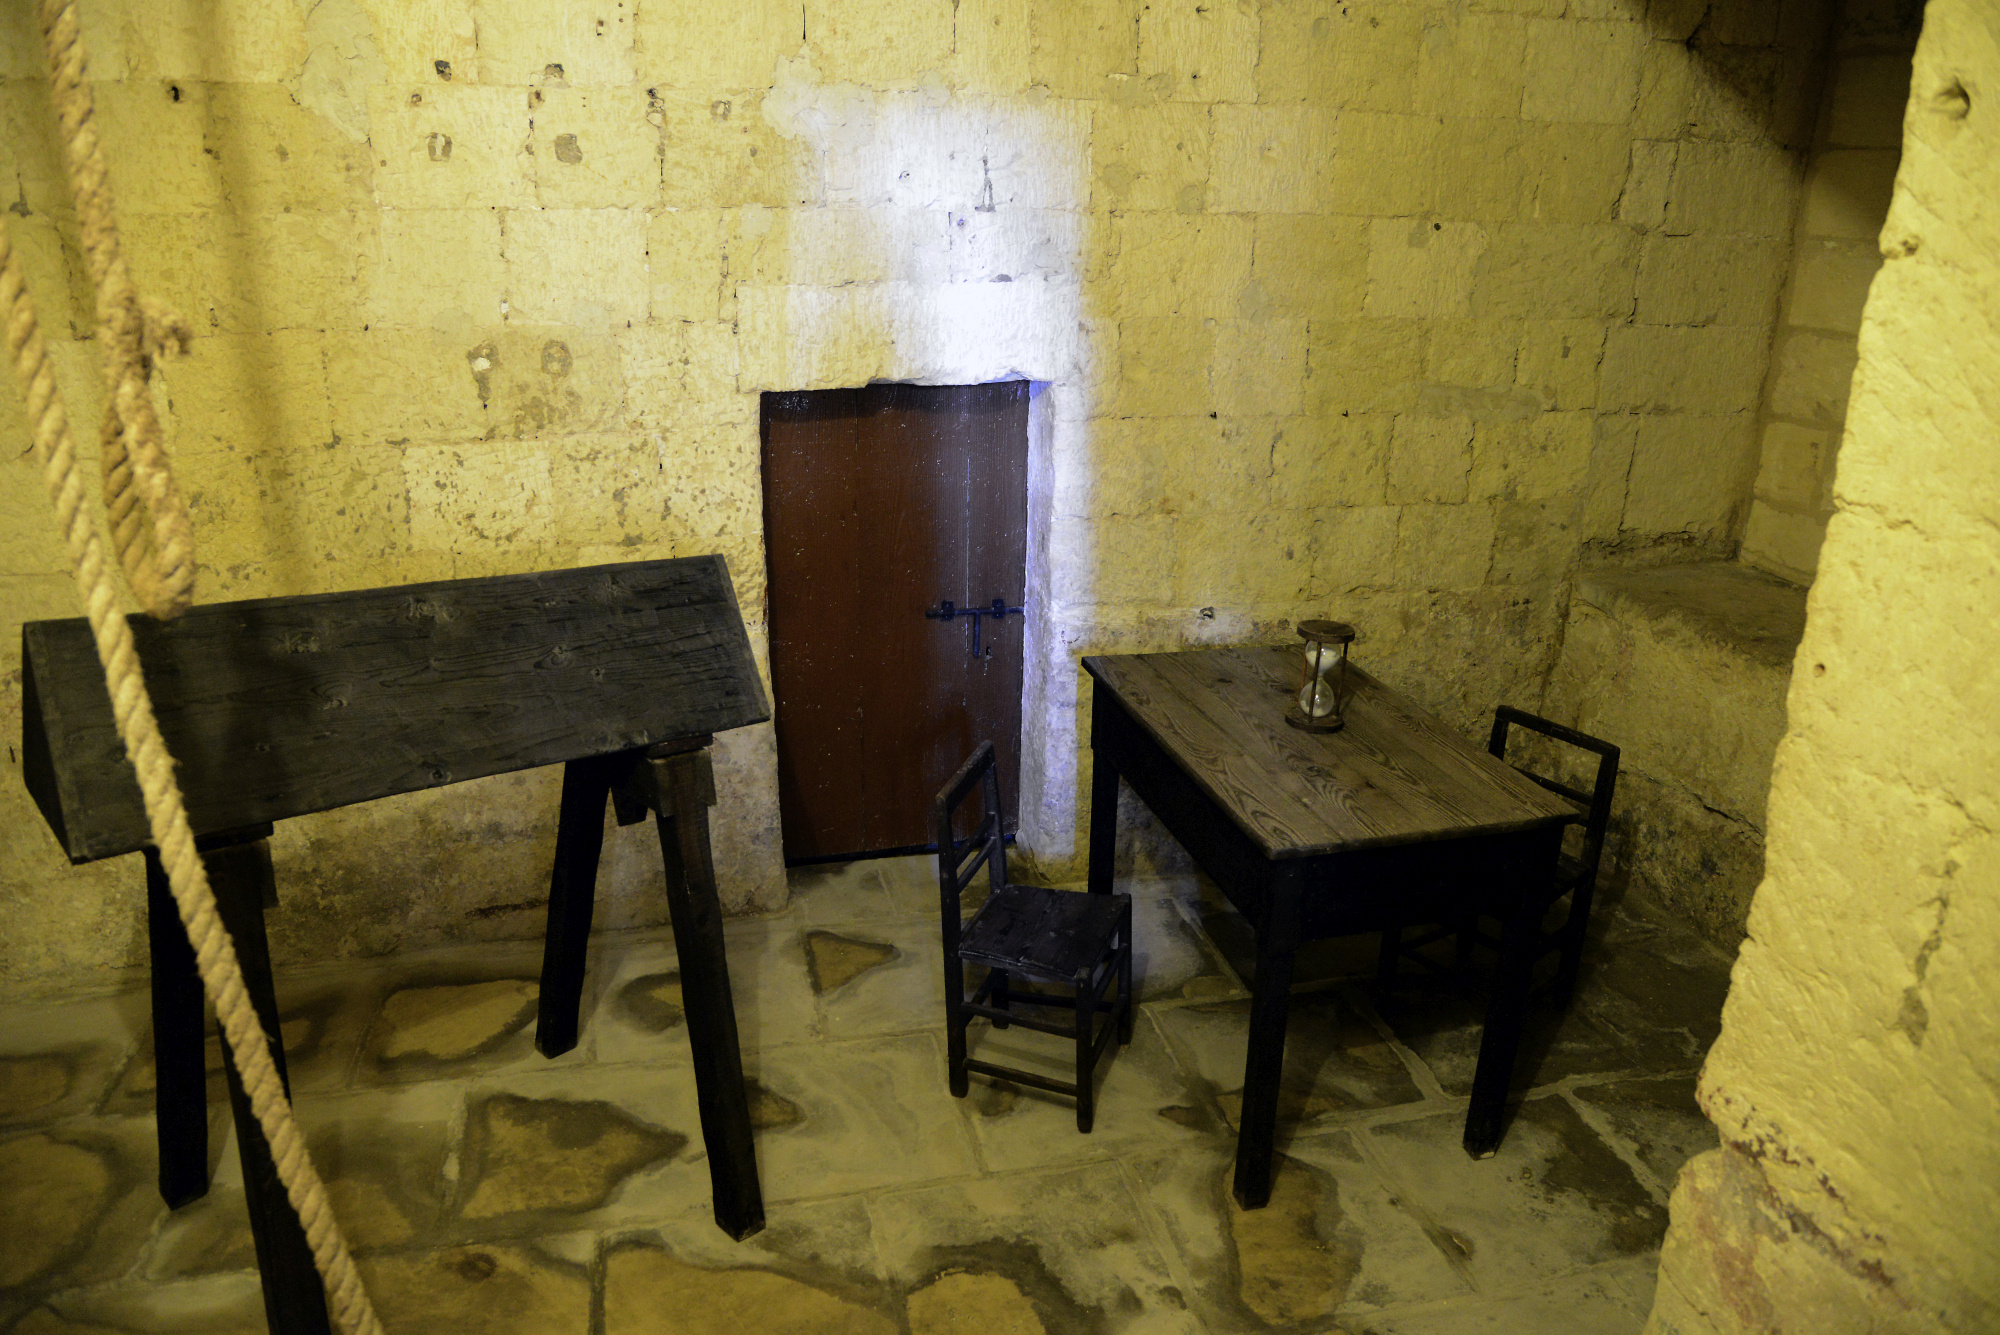 https://austria-forum.org/attach/Geography/Europe/Malta/Pictures/La_Valetta/Vittoriosa_-_Inquisitors_Palace_Torture_Chamber/MA0485_Folterkammer_Inquisitors_Palace_Vittoriosa.jpg